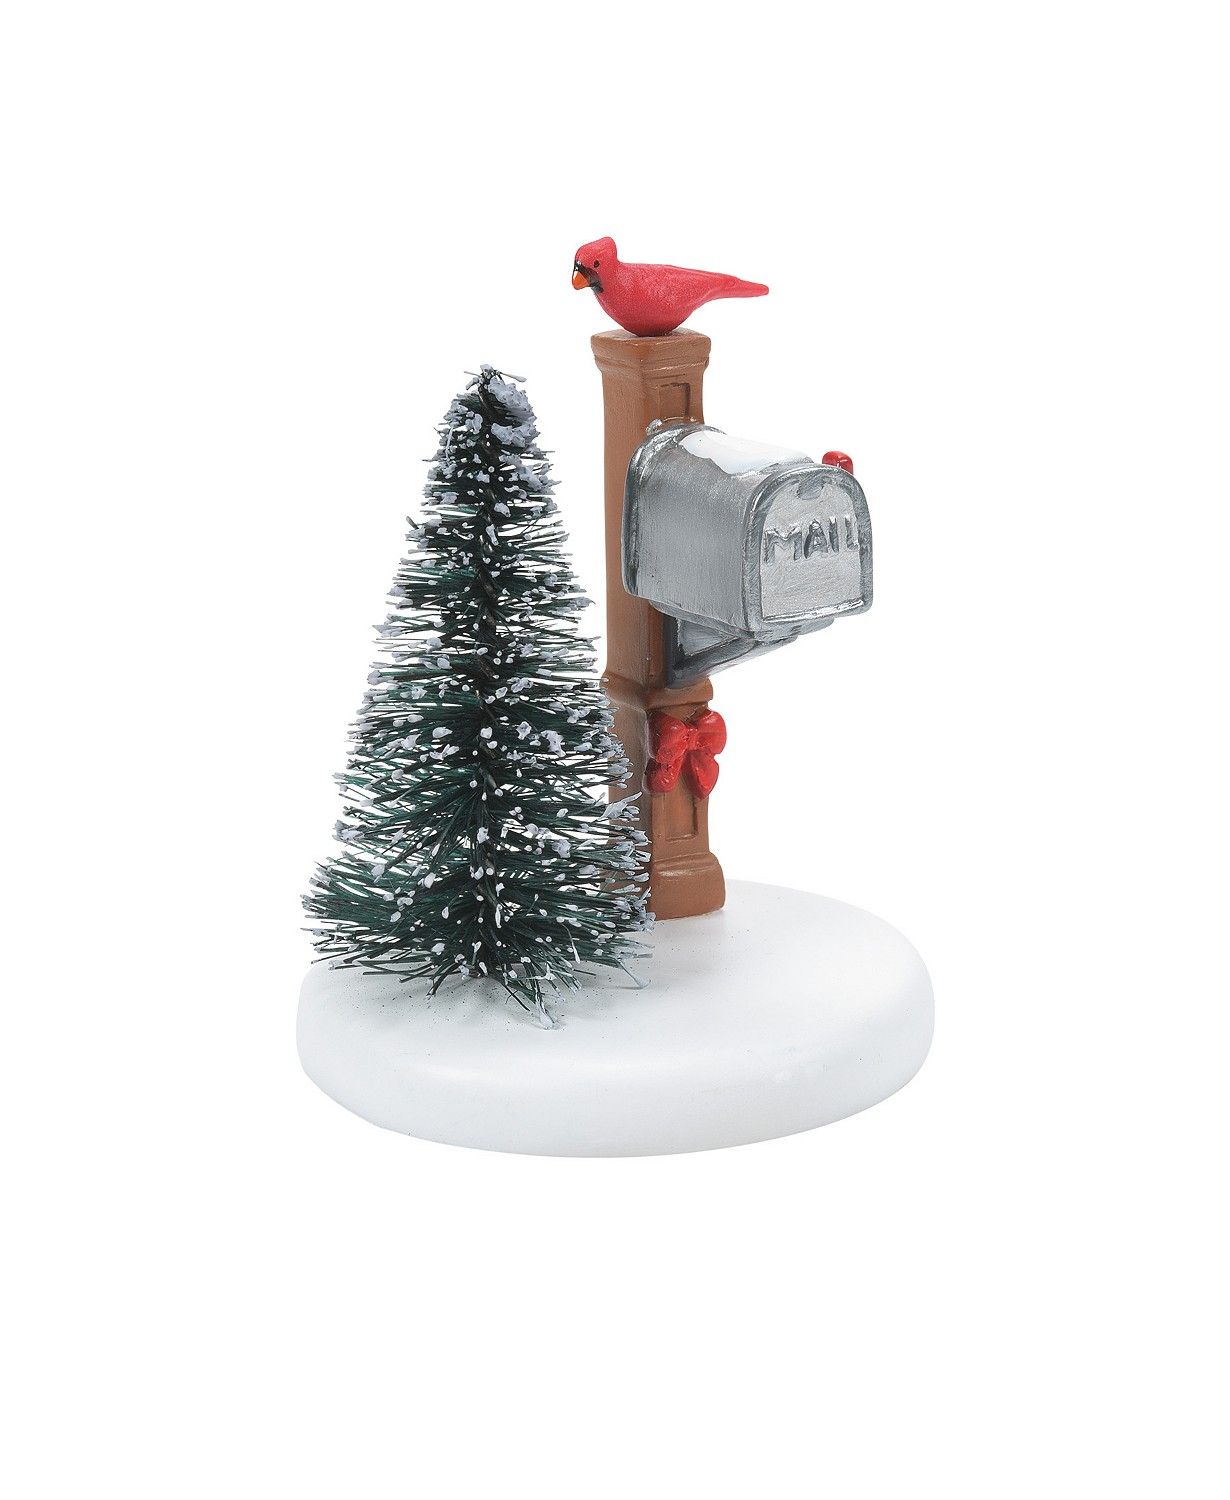 Department 56 Cardinal Christmas Mailbox & Reviews - Shop All Holiday - Home - Macy's | Macys (US)